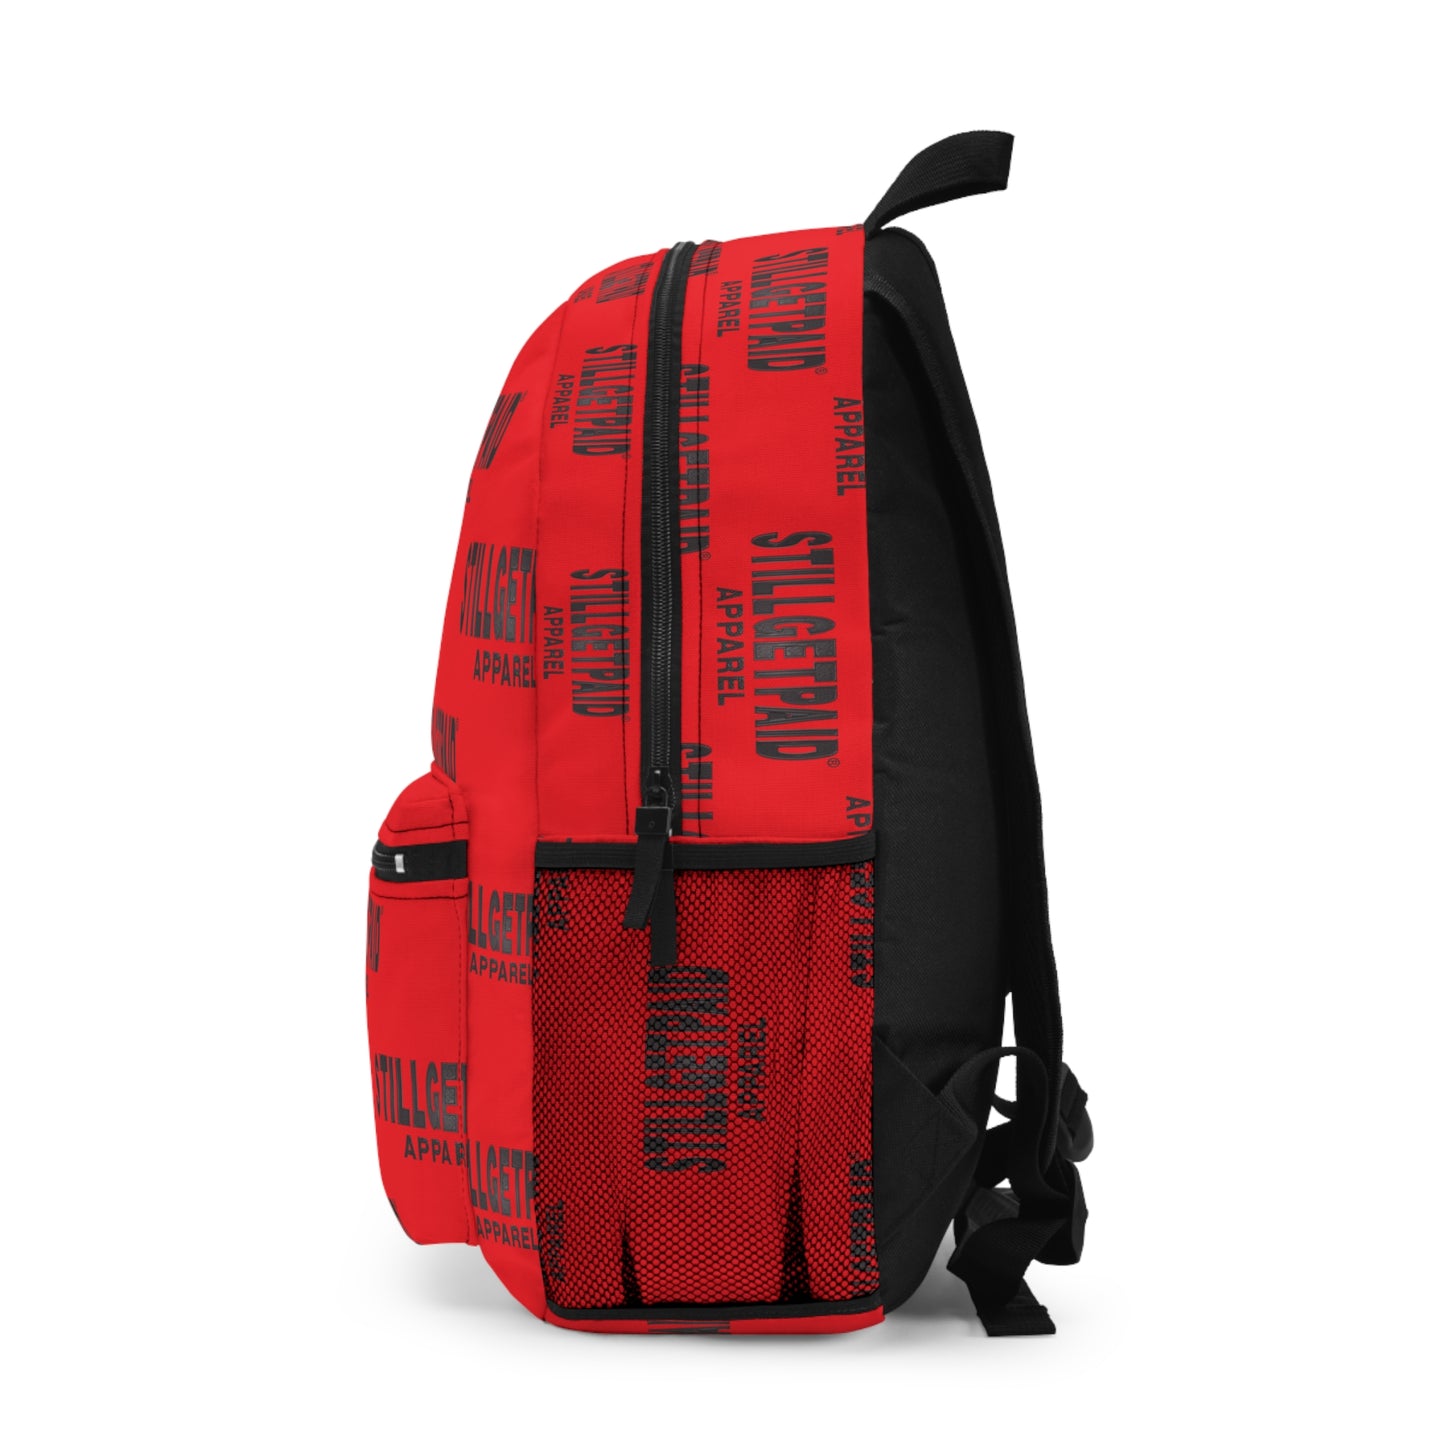 STILLGETPAID Backpack FULL RED